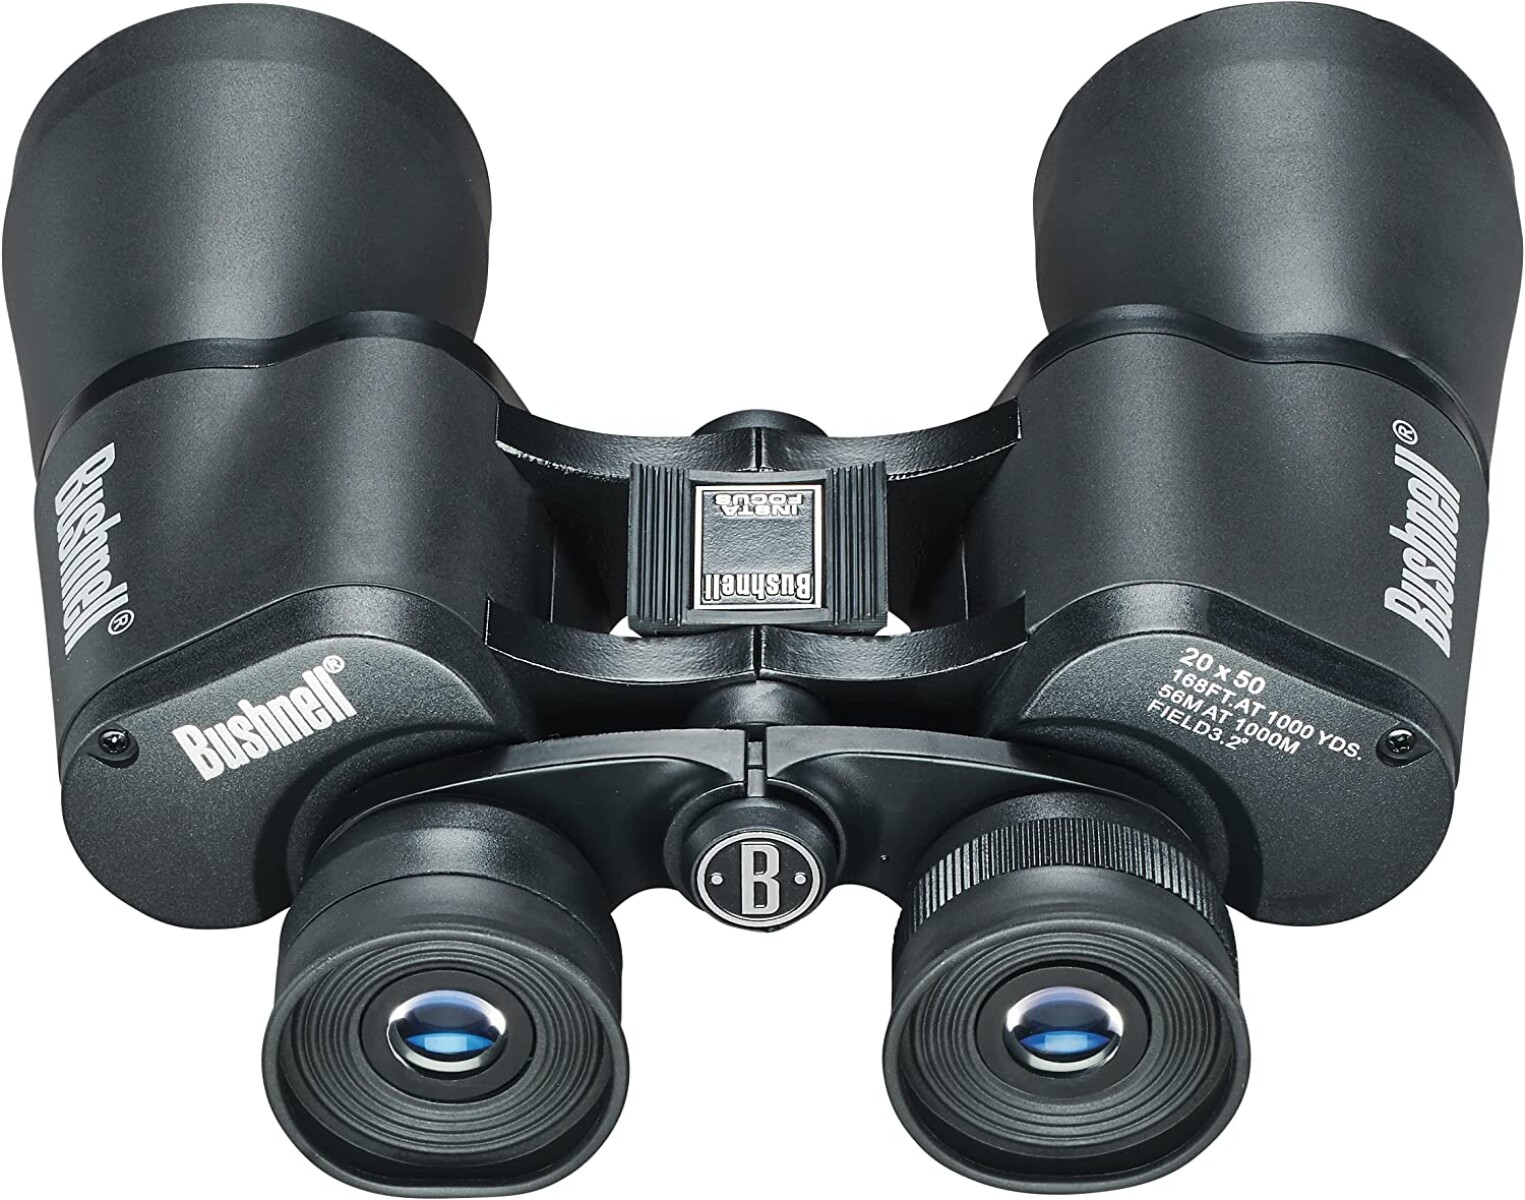 Binocular Bushnell Pacifica 20 X 50mm 212050 